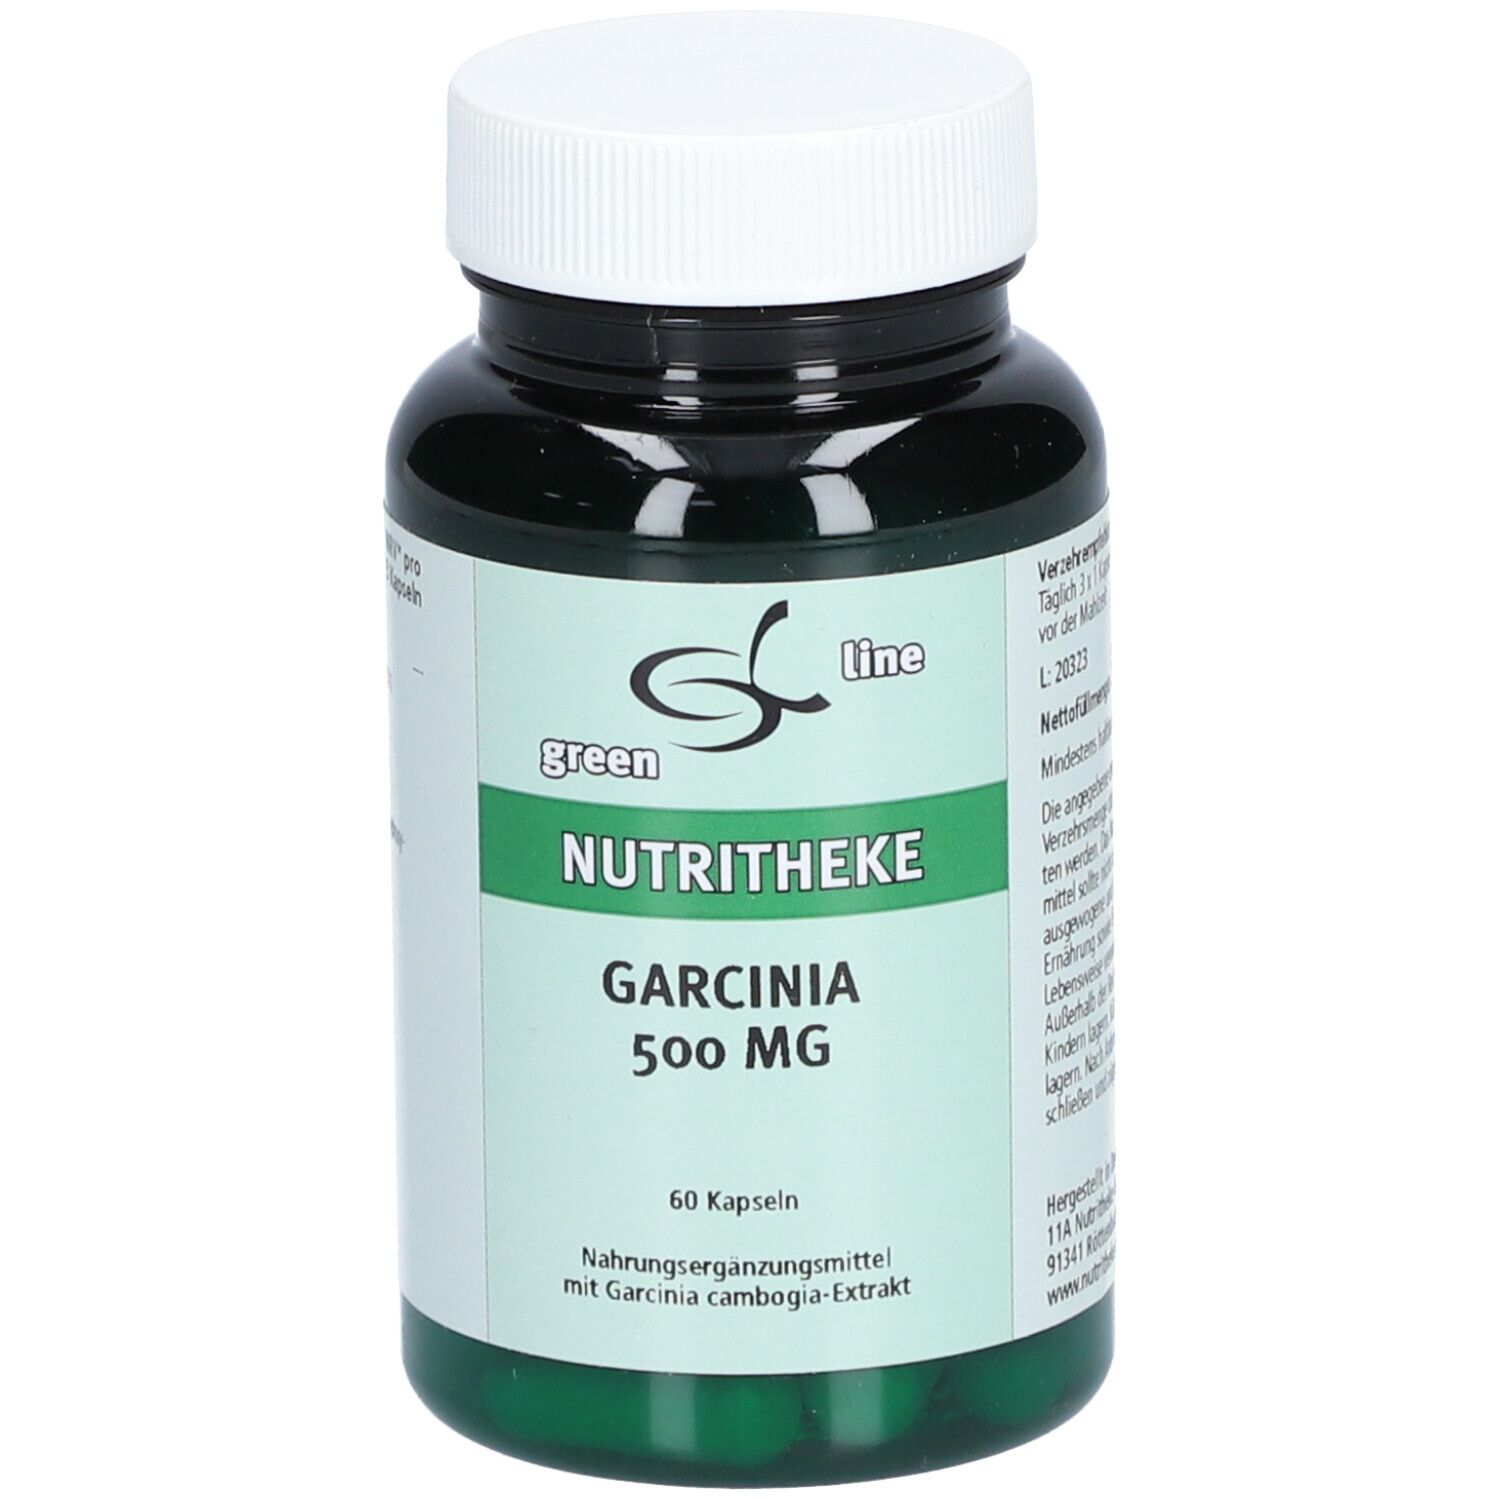 11 A Nutritheke GmbH green line Garcinia 500 mg